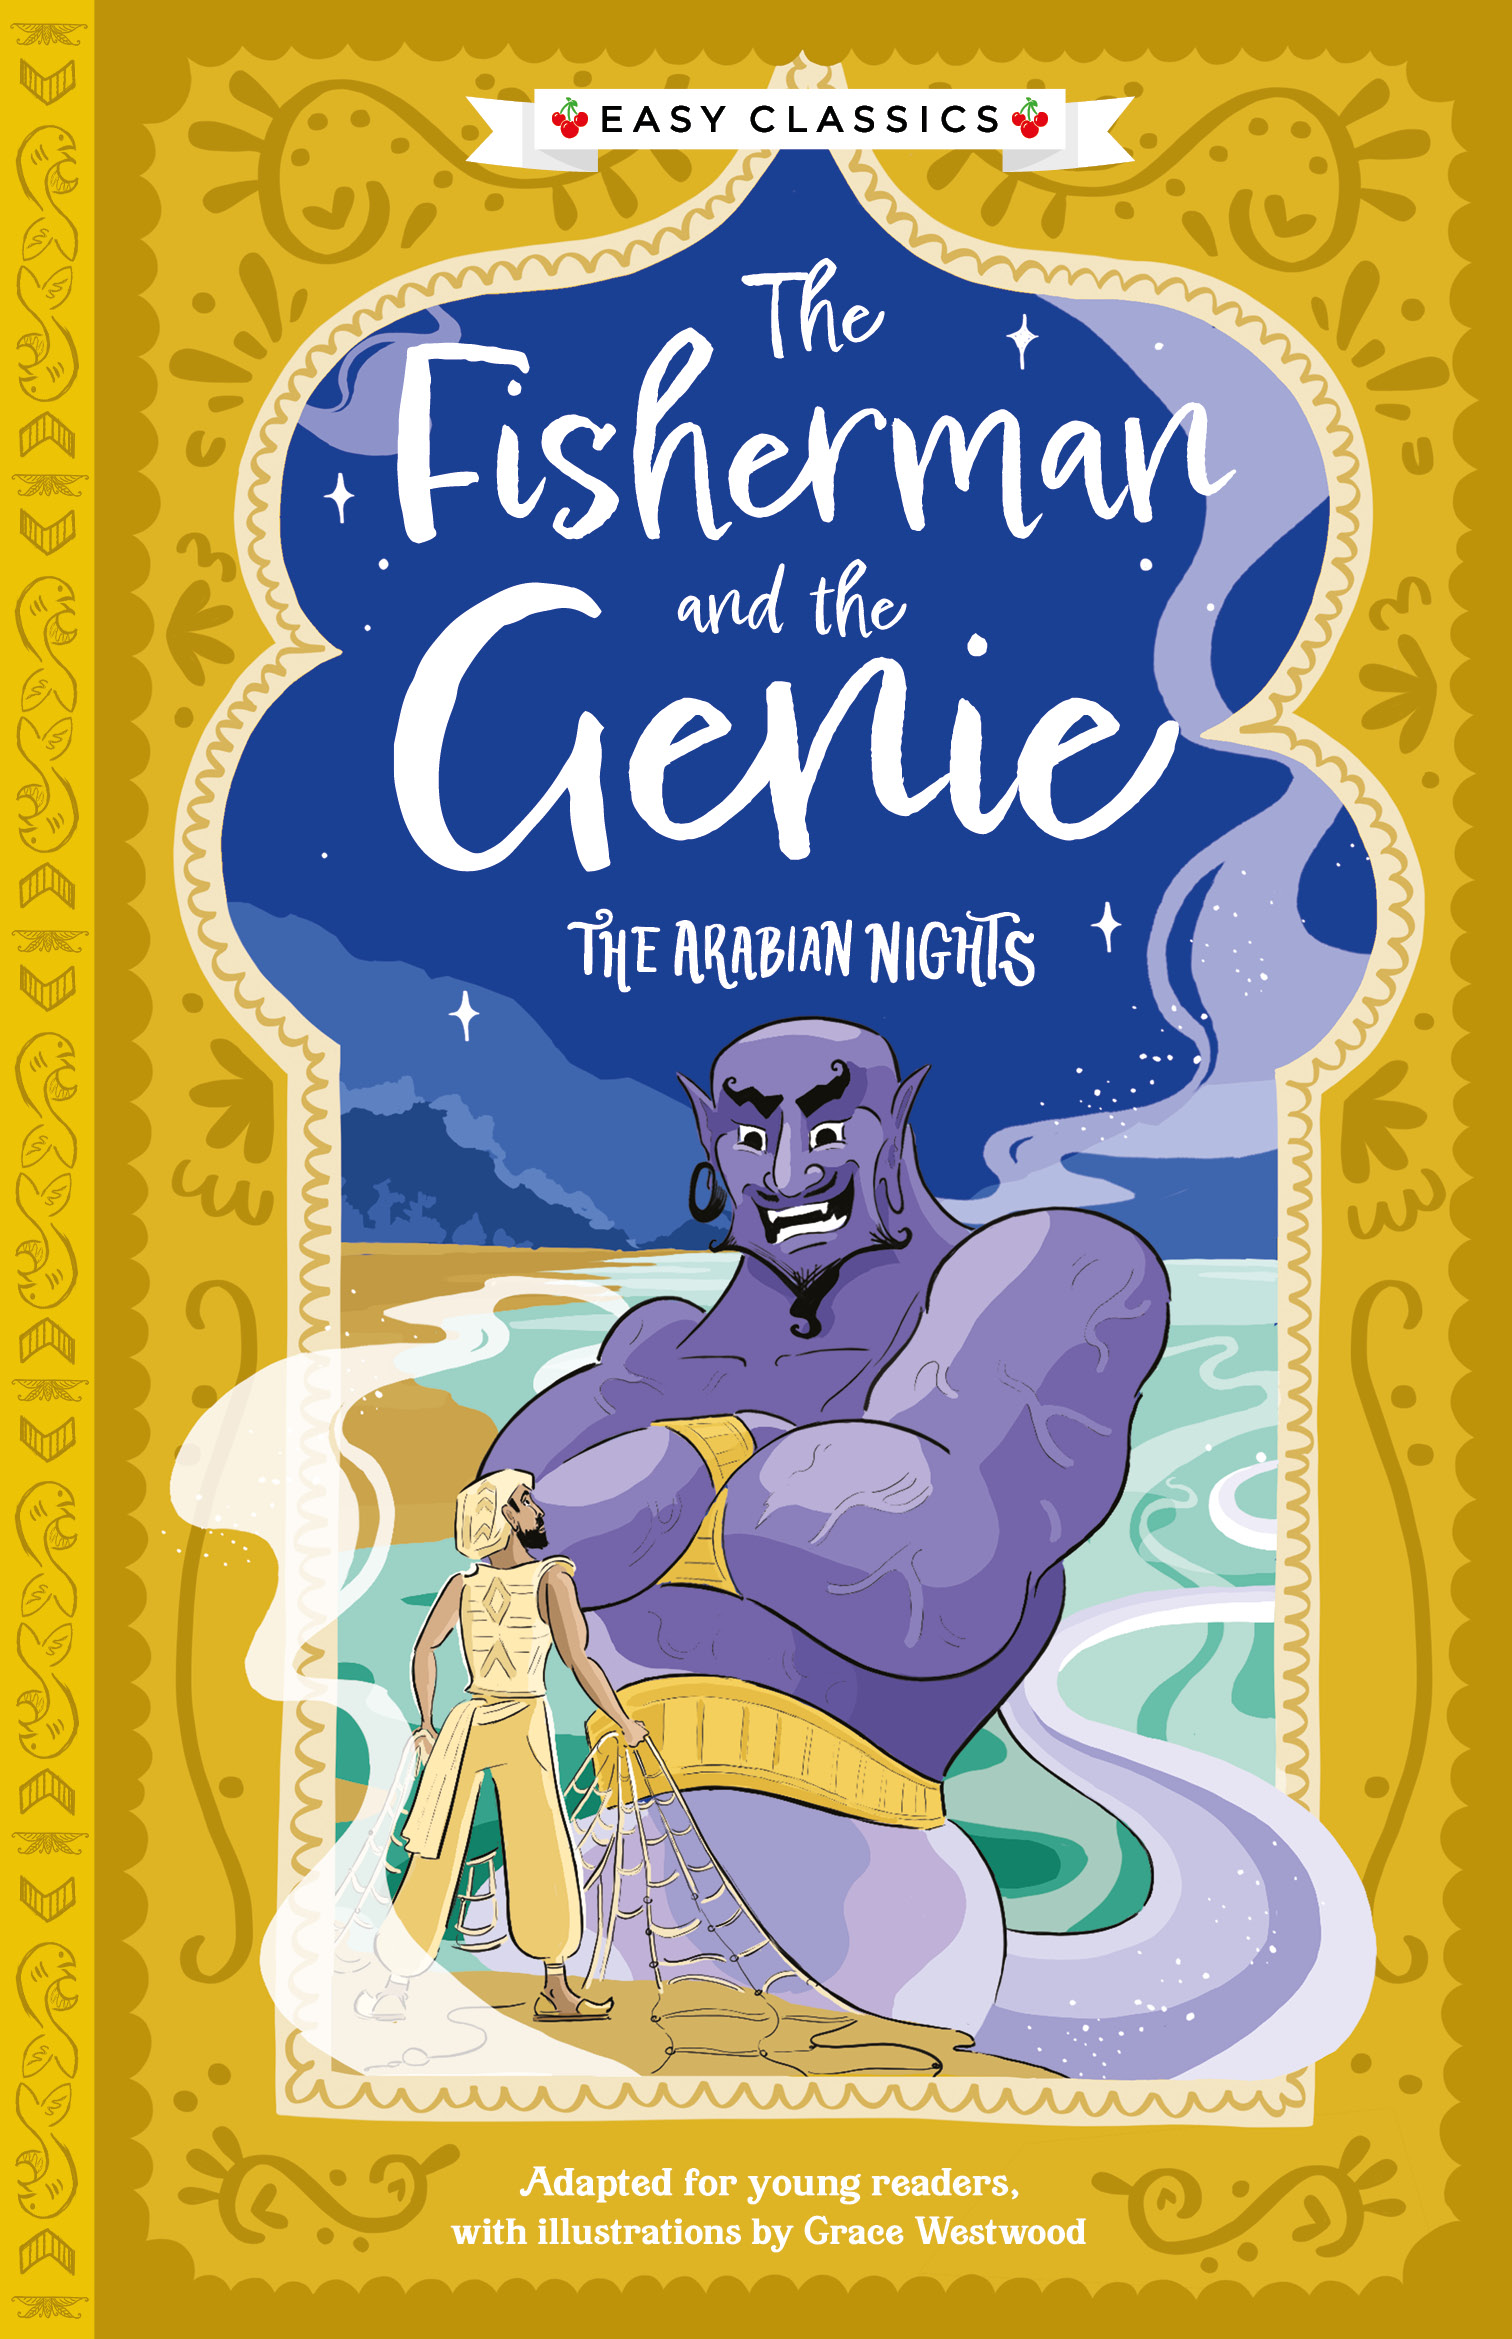 1001 Arabian Nights 3: The Fisherman and the Jinni